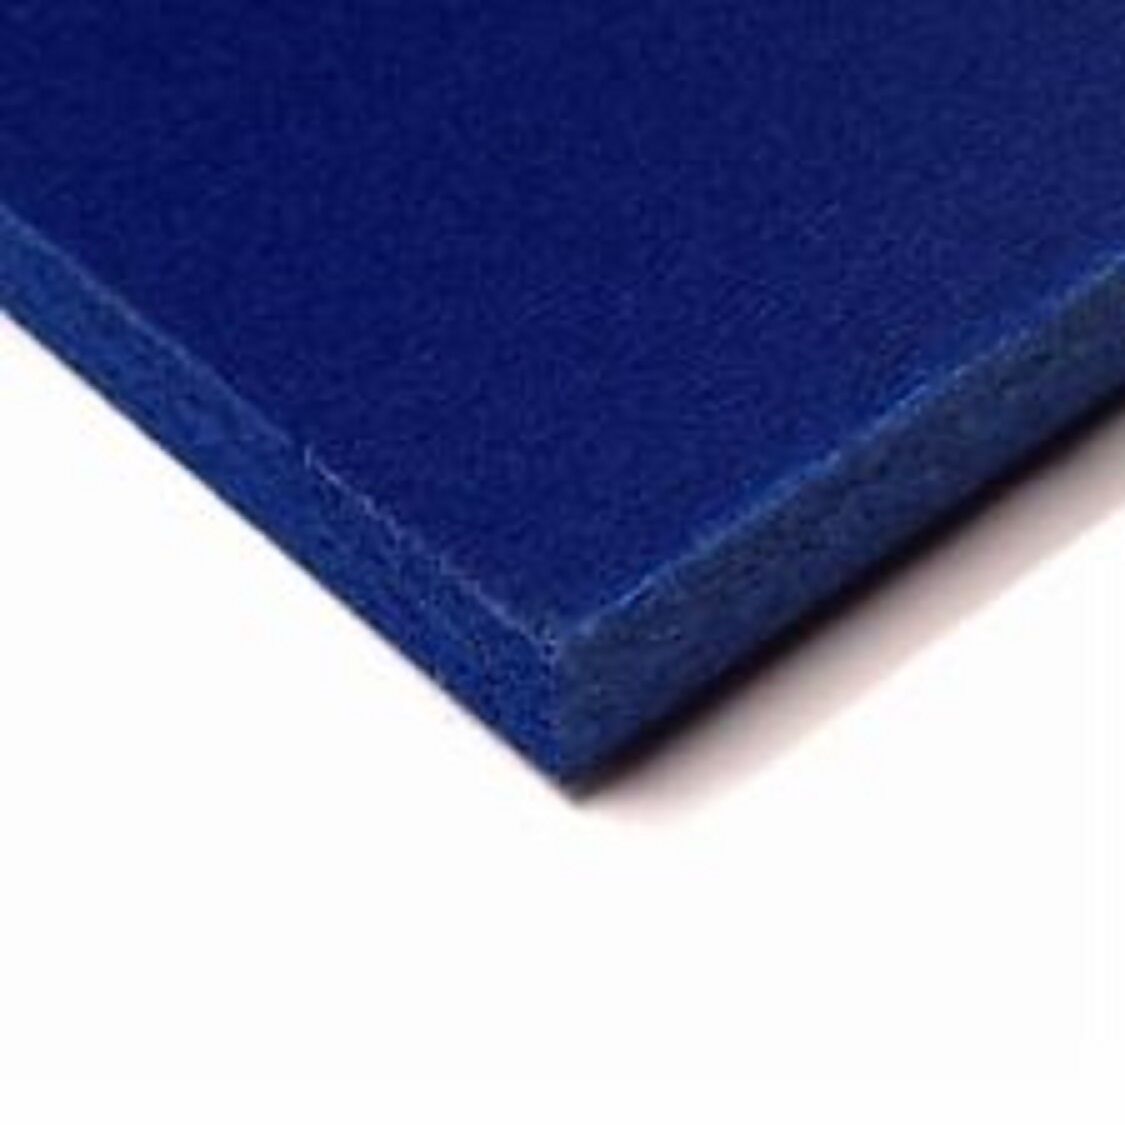 Sibe-R Plastic Supply℠ DARK BLUE PVC FOAM BOARD PLASTIC SHEETS 6 MM 24